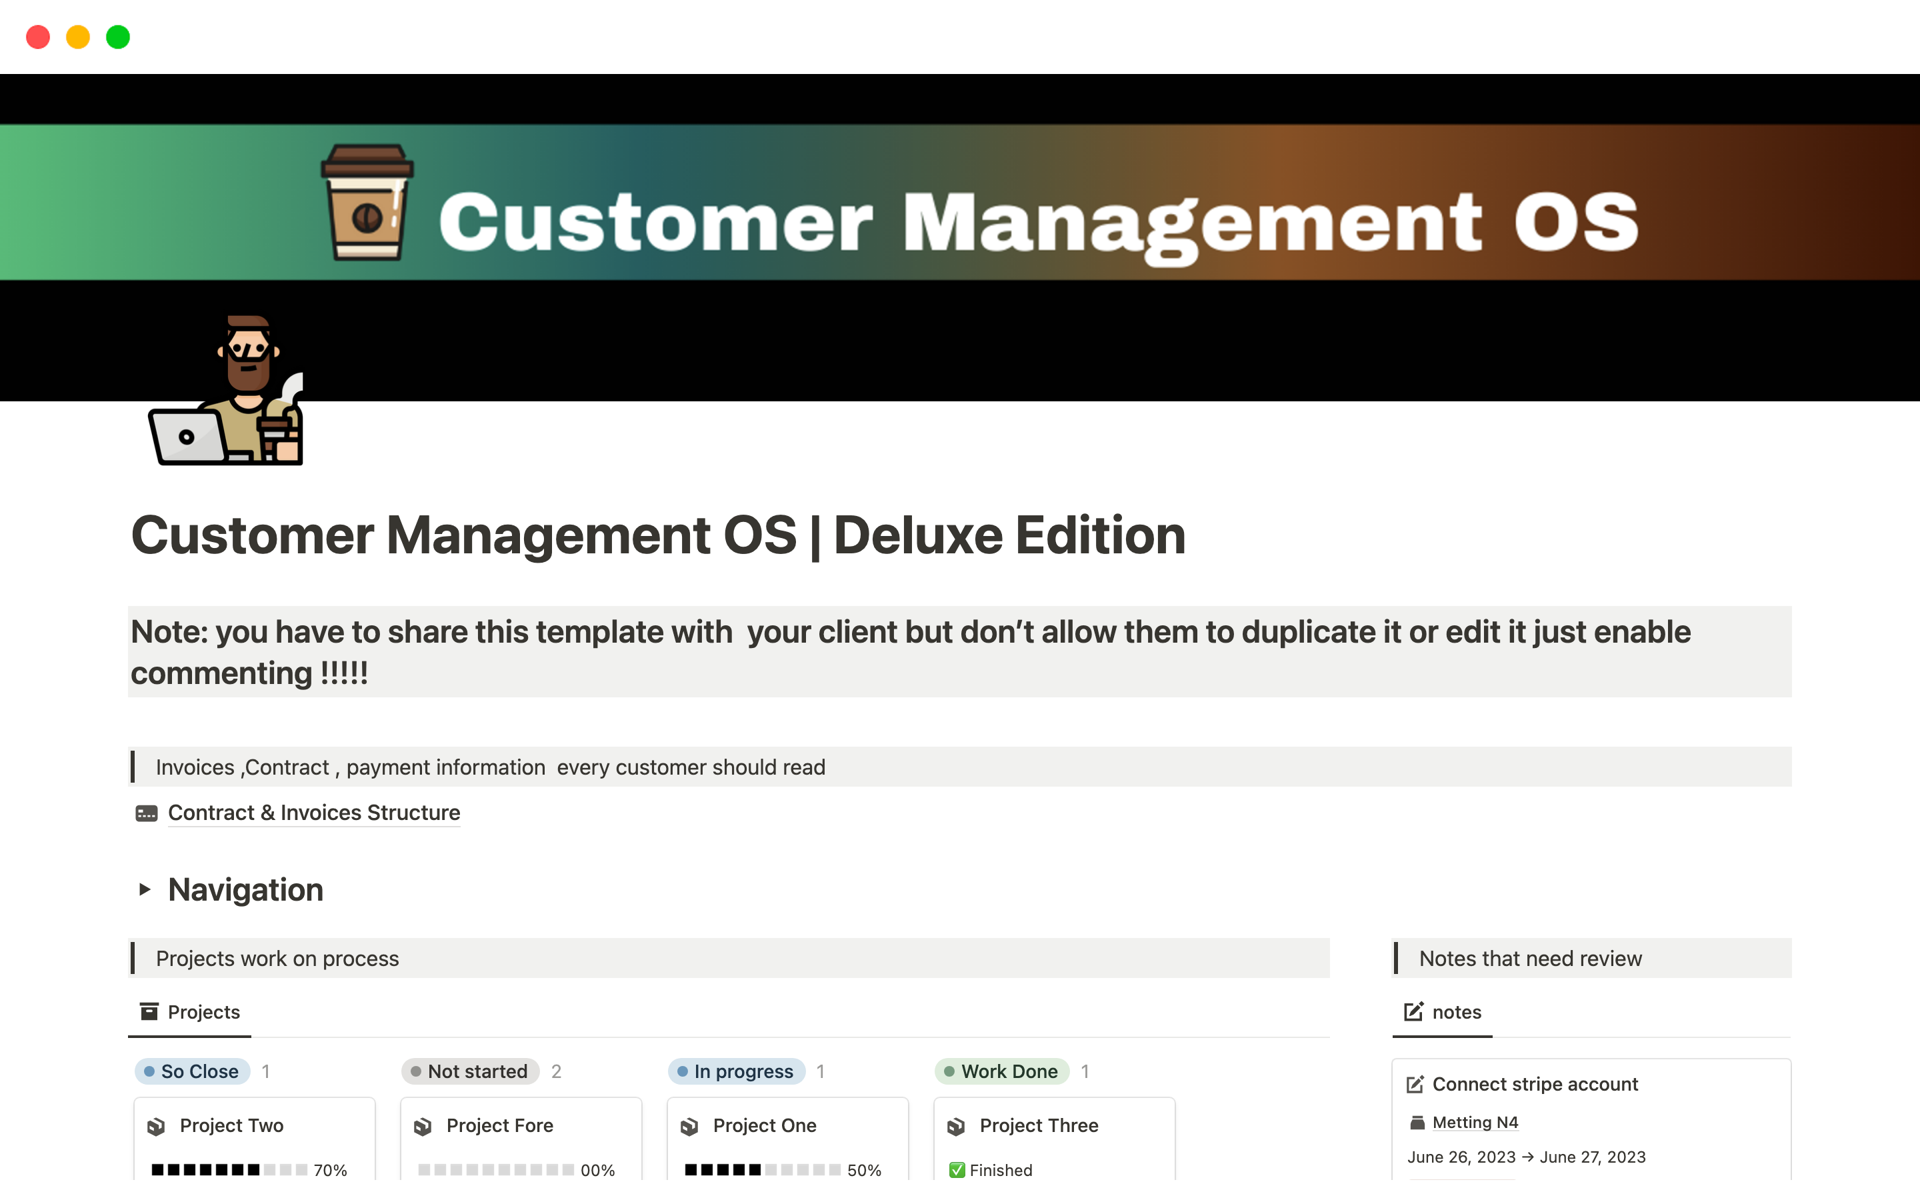 Customer Management OS | Deluxe Edition님의 템플릿 미리보기